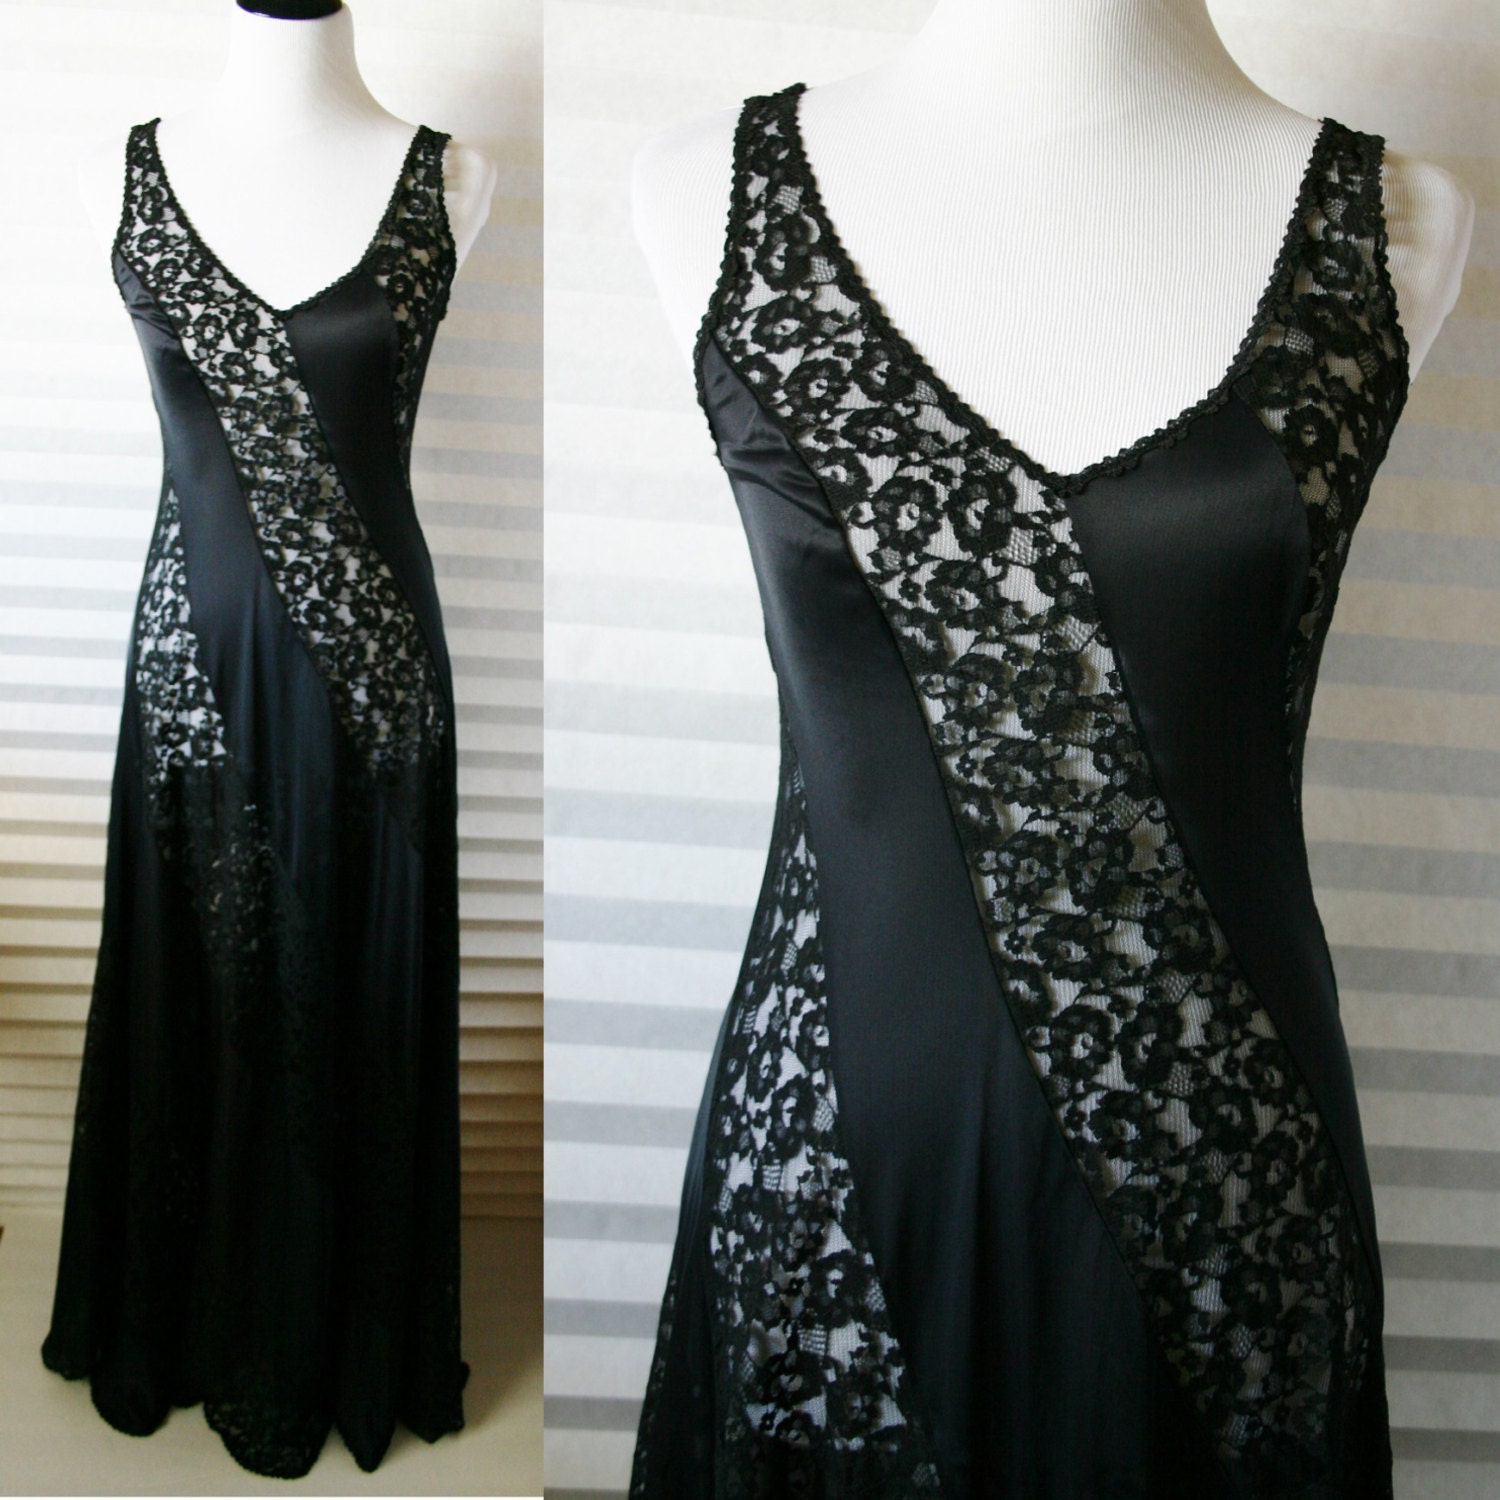 ON SALE Vintage Lingerie / Black Lace Slip Dress / 30's